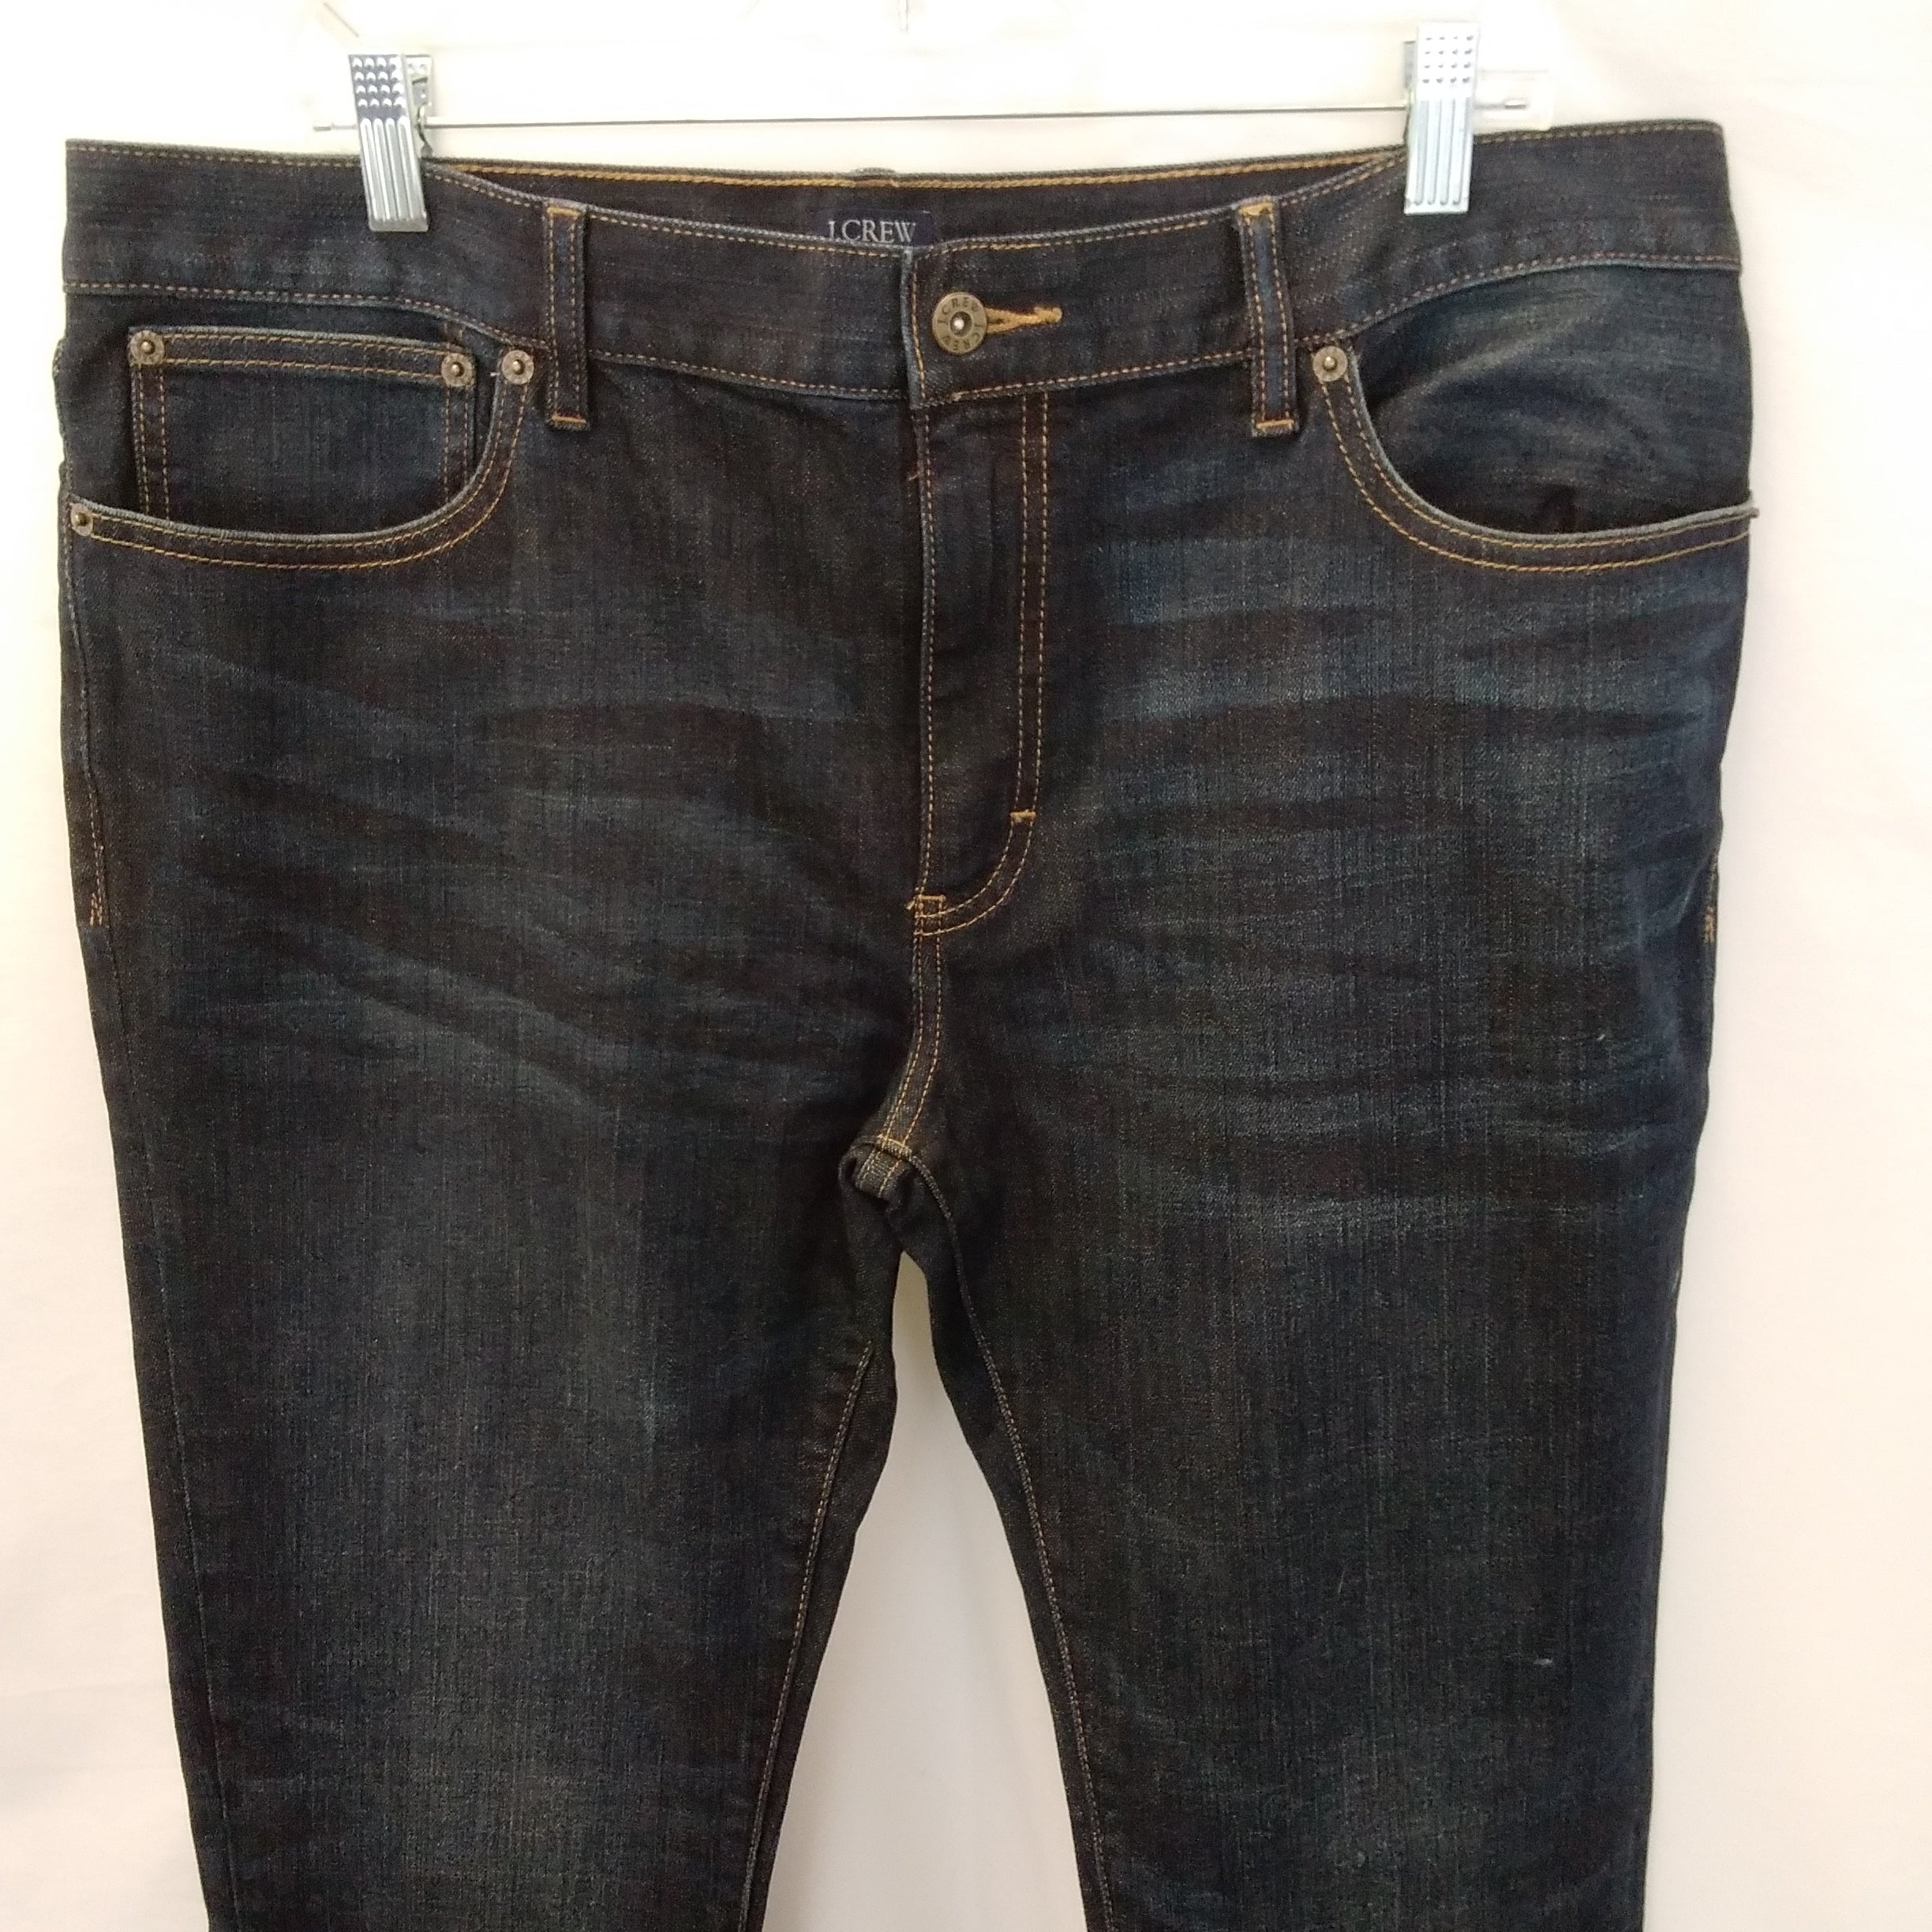 Buy Mid Wash Blue Slim Jeans Pants Online At Great Price – Rockstar Jeans